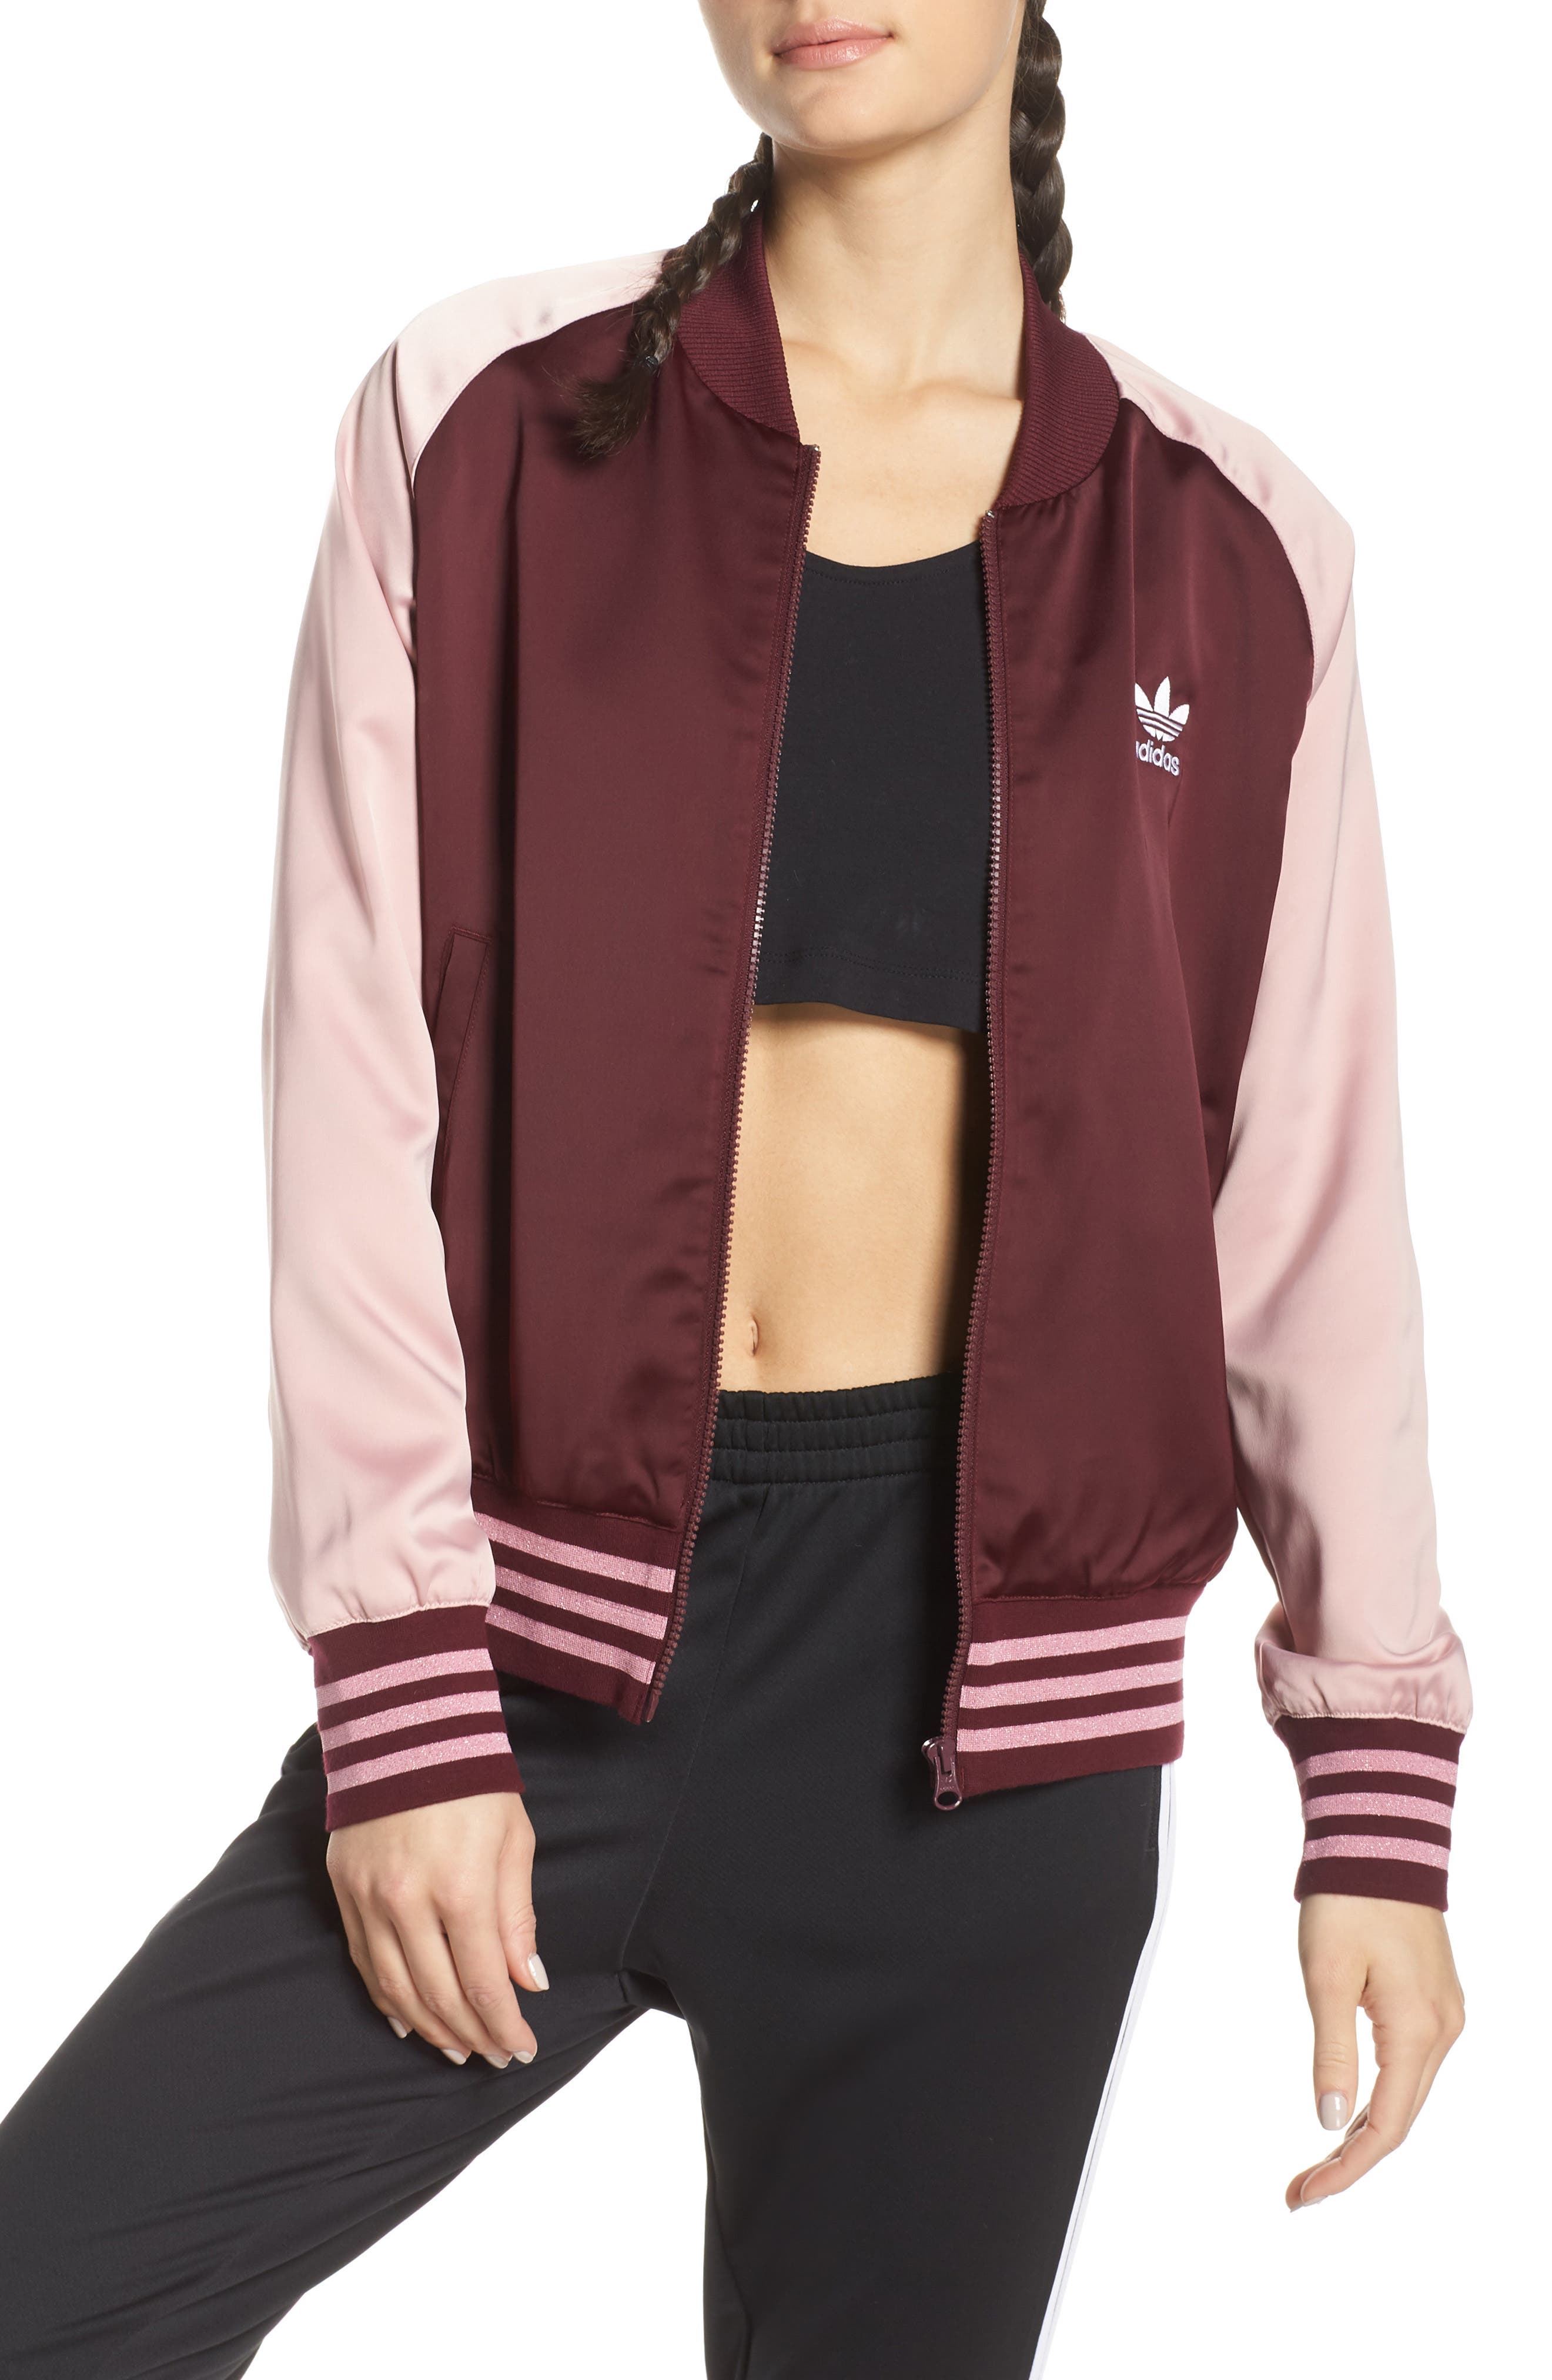 adidas maroon & pink satin track jacket